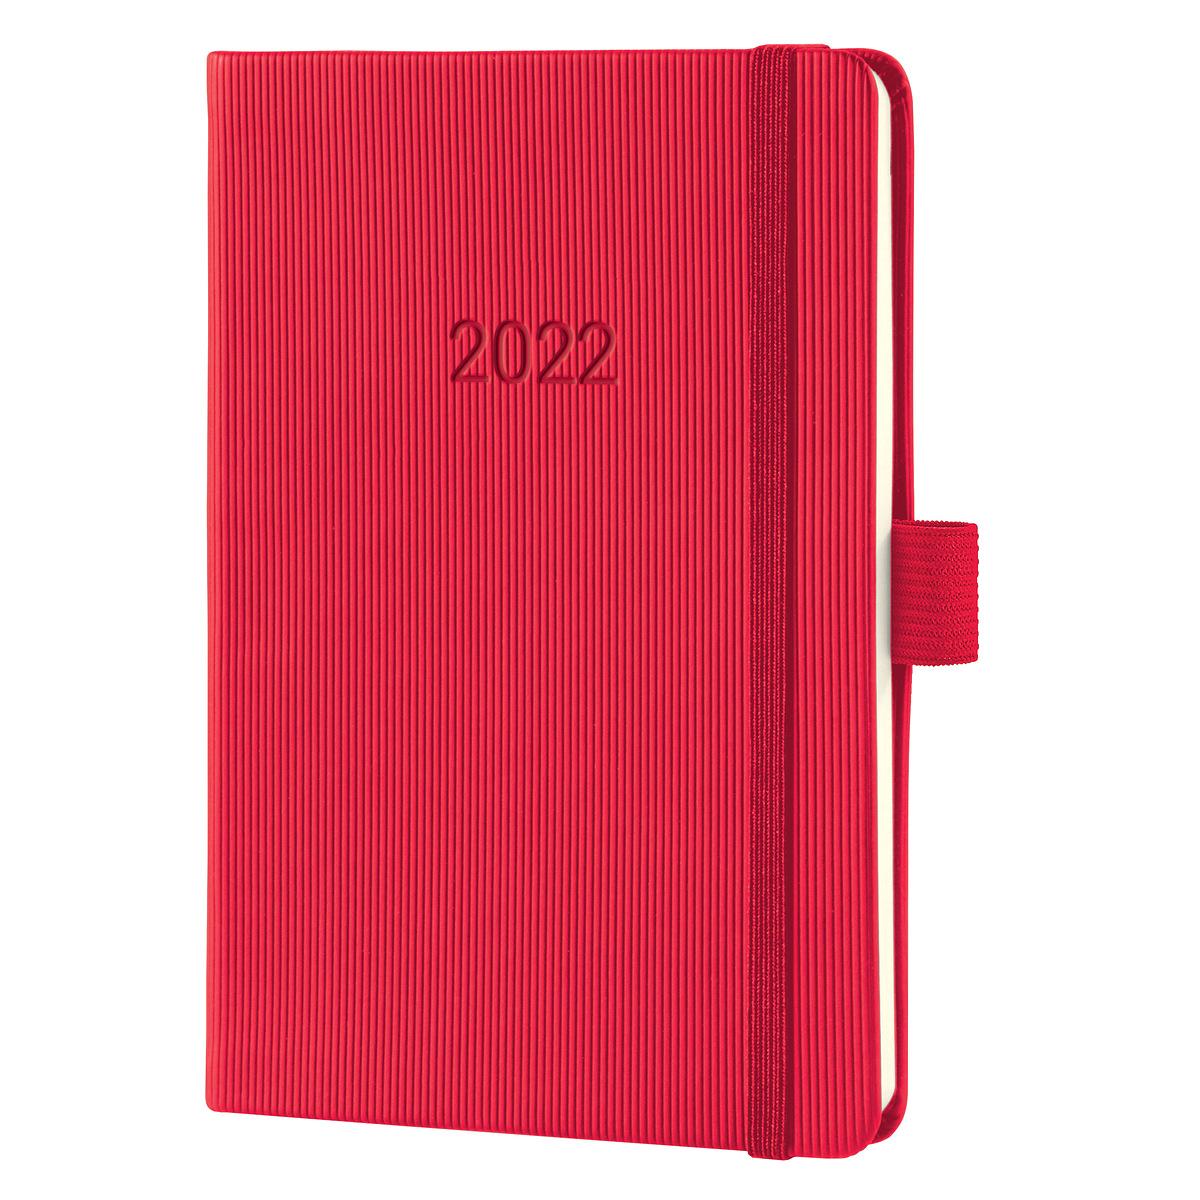 C2265-Kalender-2022-CONCEPTUM-hardcover